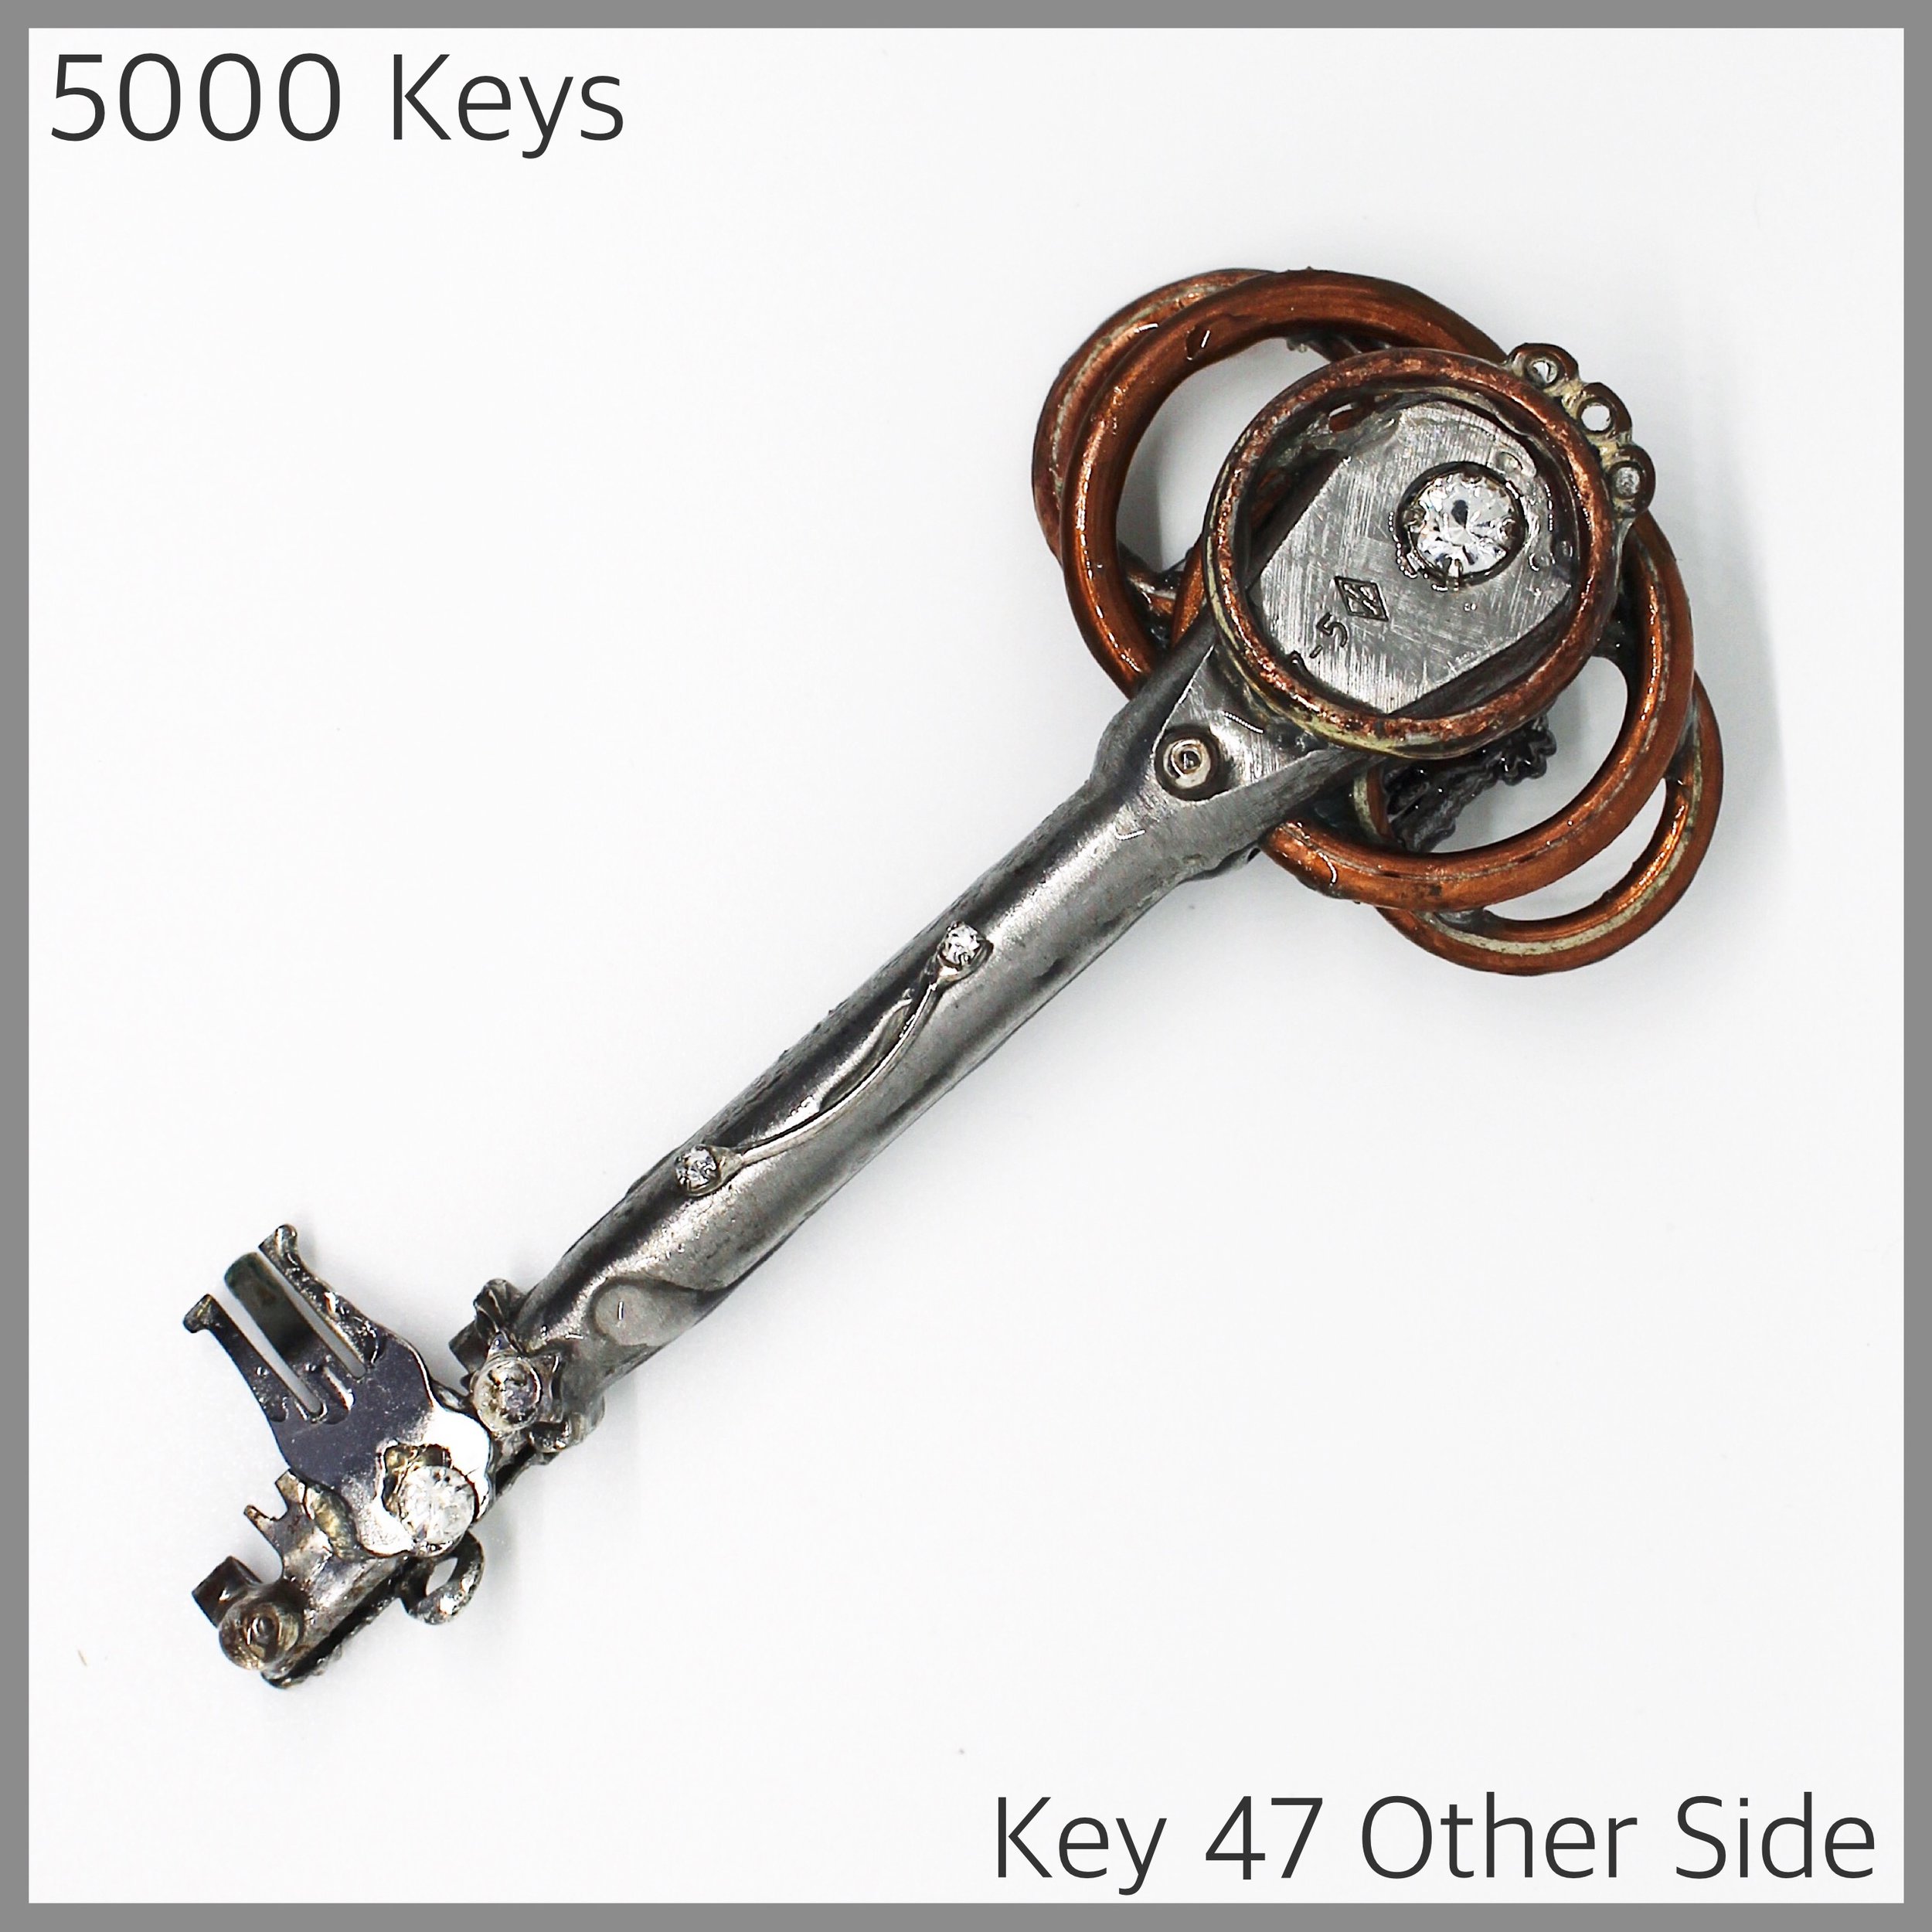 Key 47 other side - 1.JPG